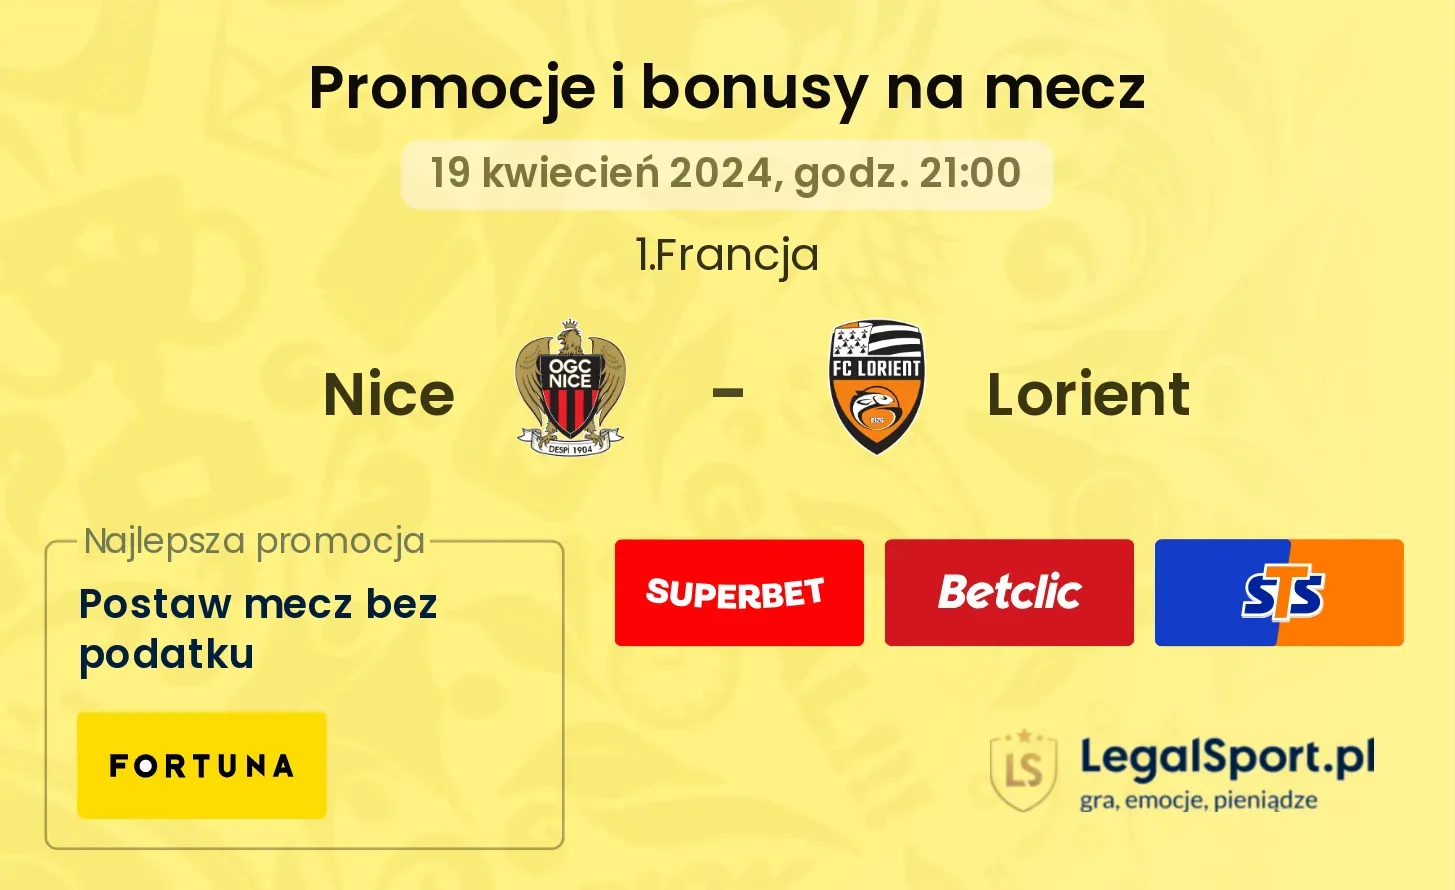 Nice - Lorient promocje bonusy na mecz